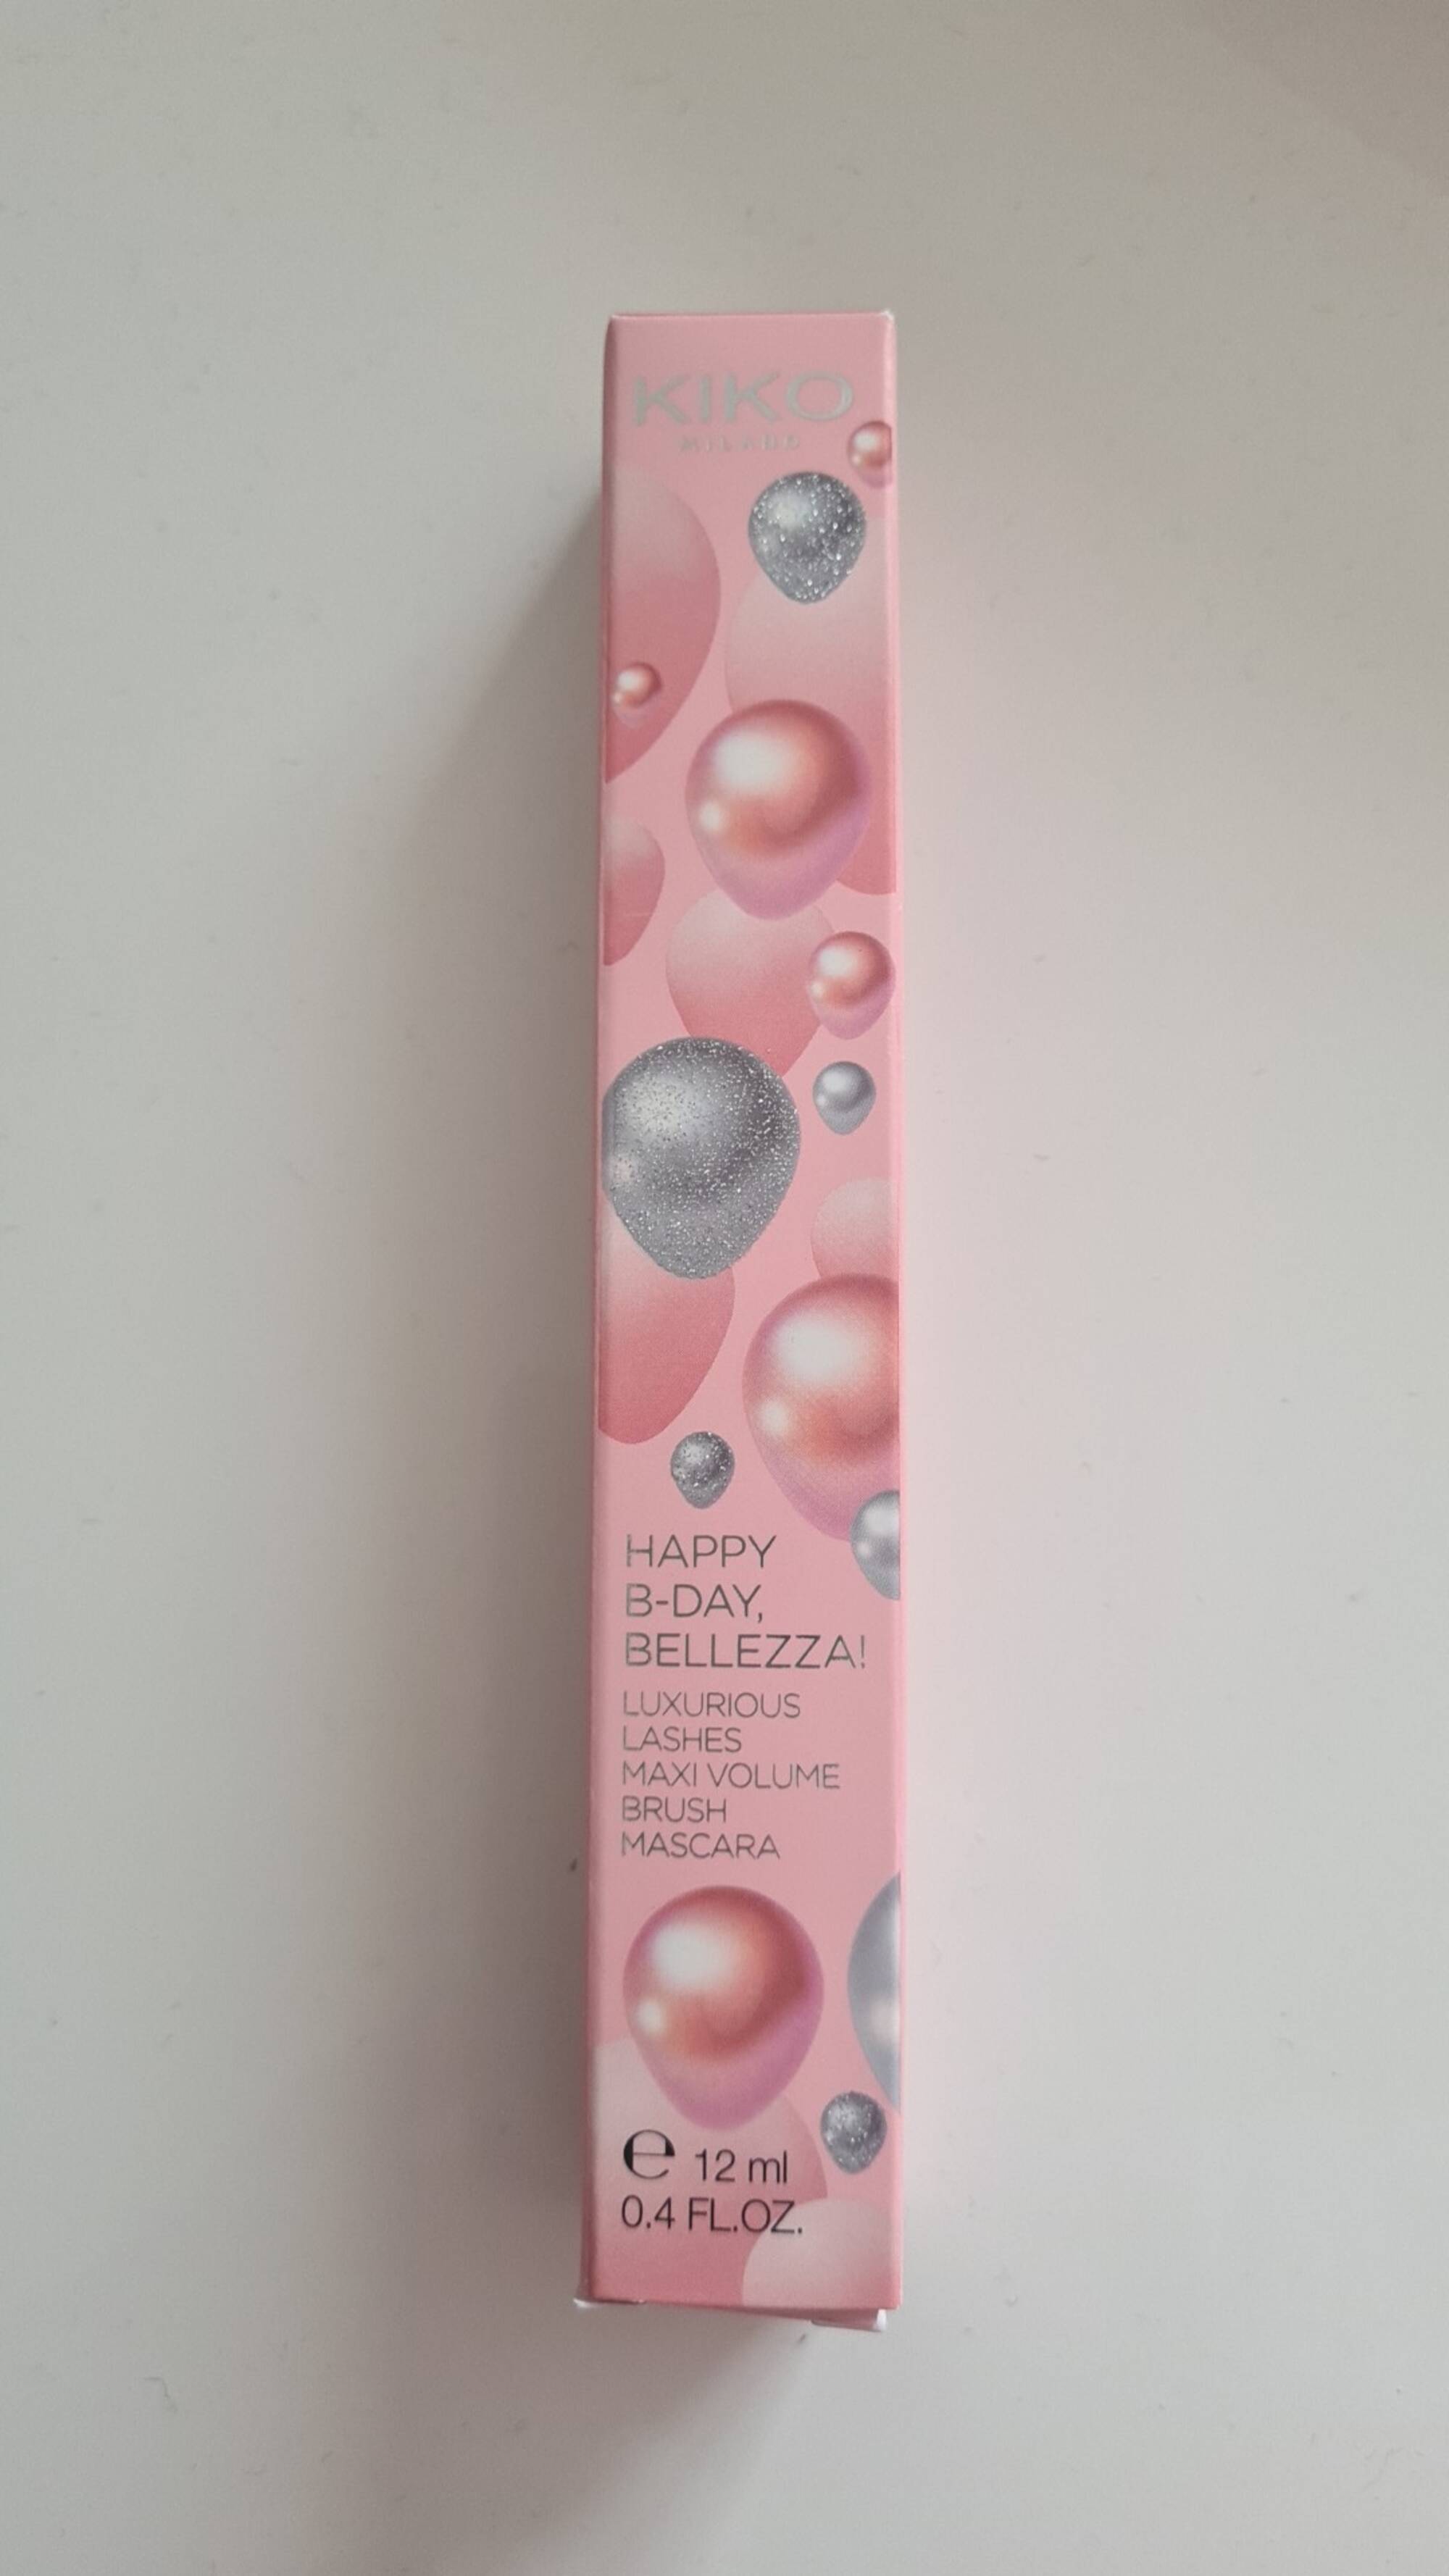 KIKO - Happy b-day bellezza - Maxi volume brush mascara